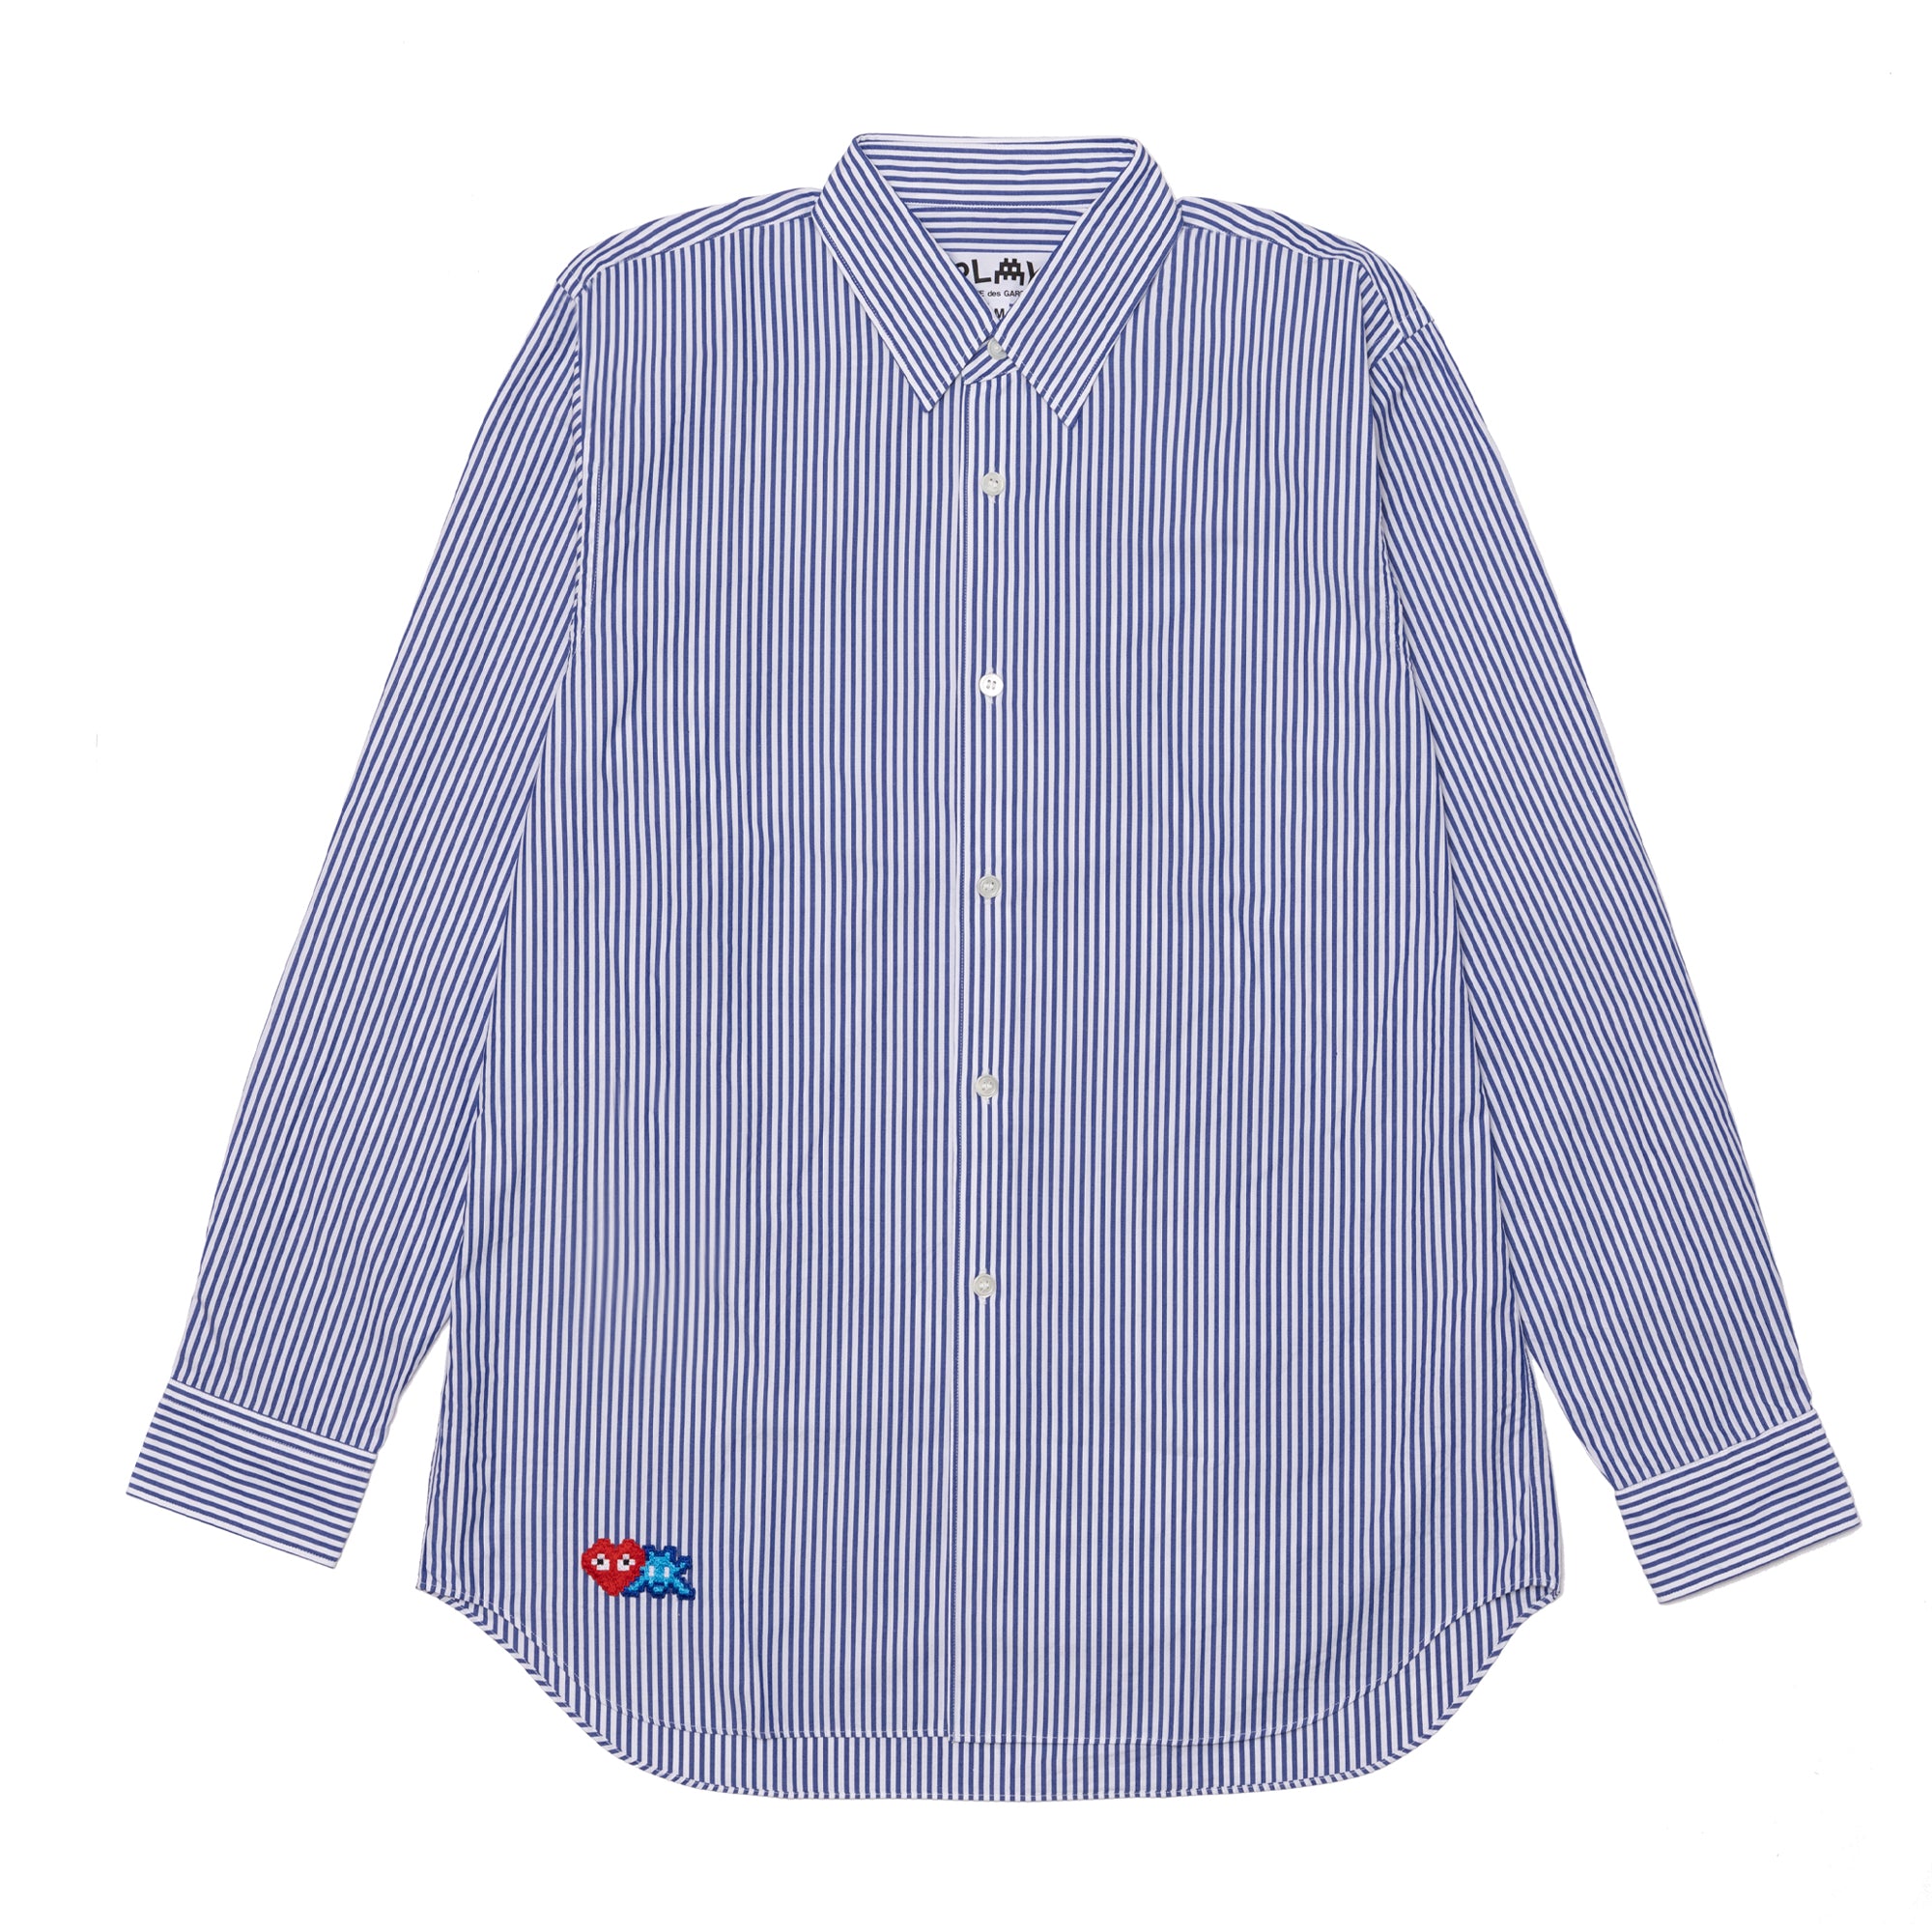 PLAY CDG - INVADER Emblem Cotton Broad Shirt - (Stripe A) view 1